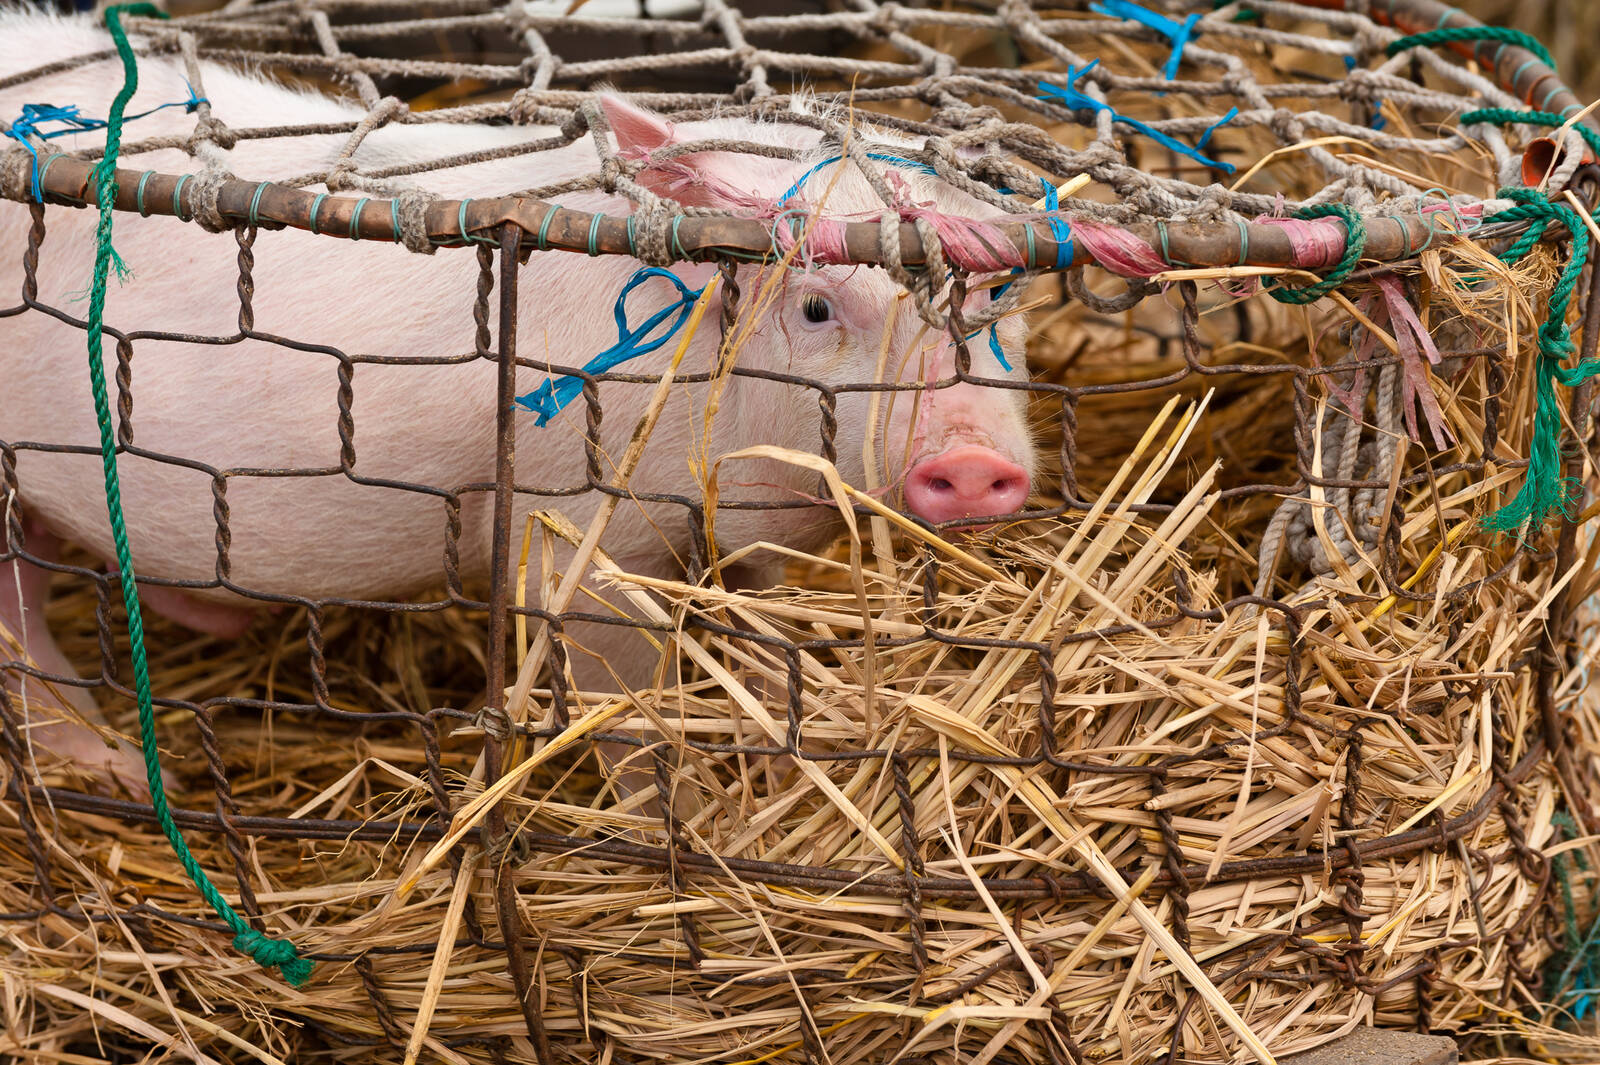 Image of Ba Ren Pig Market by Sue Wolfe